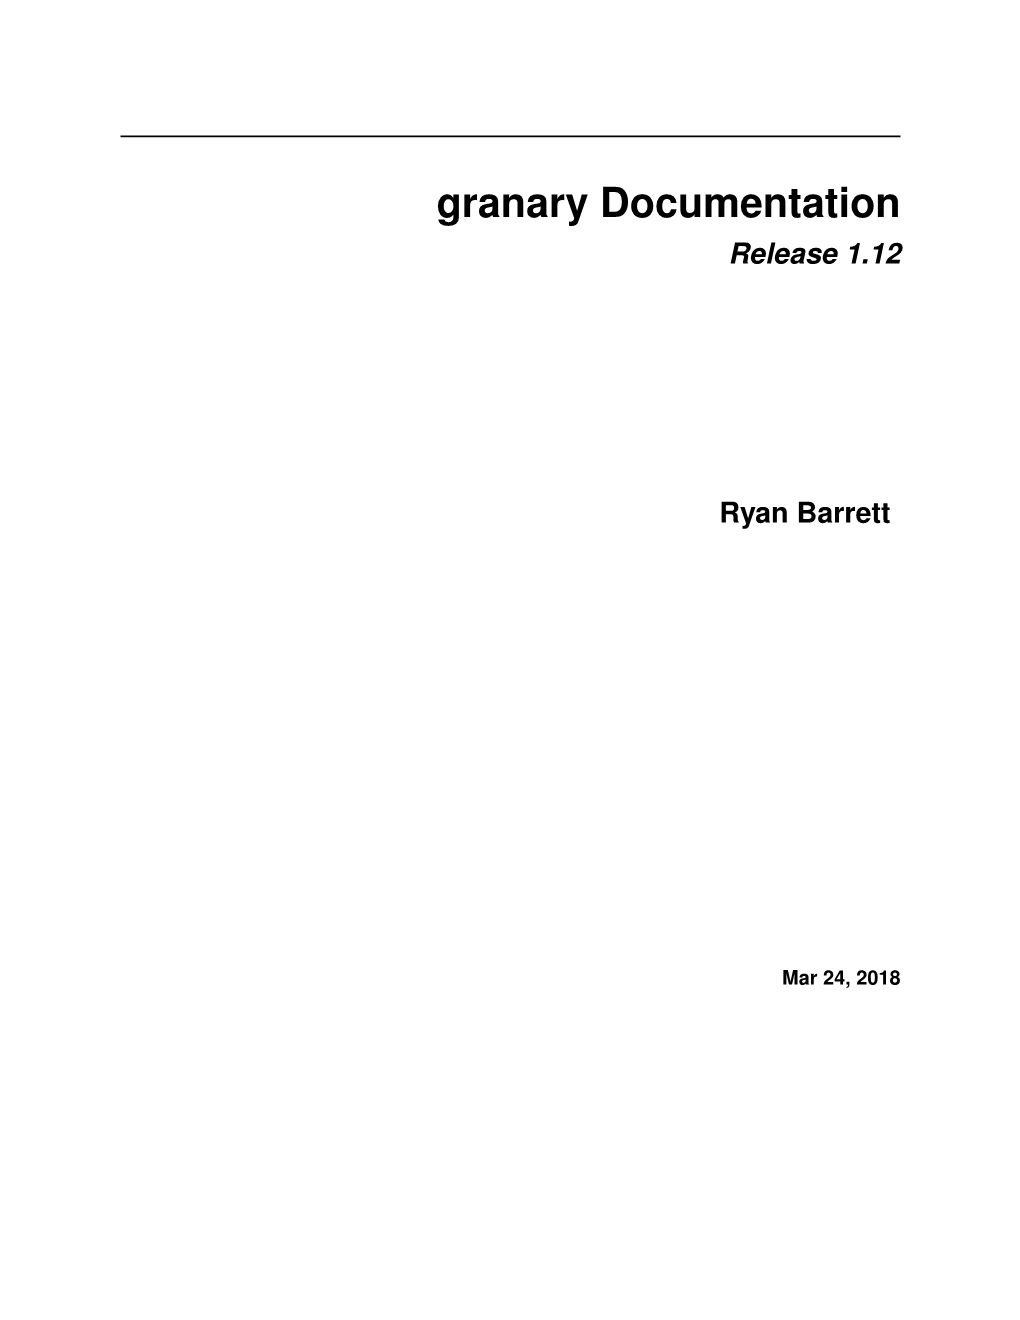 Granary Documentation Release 1.12